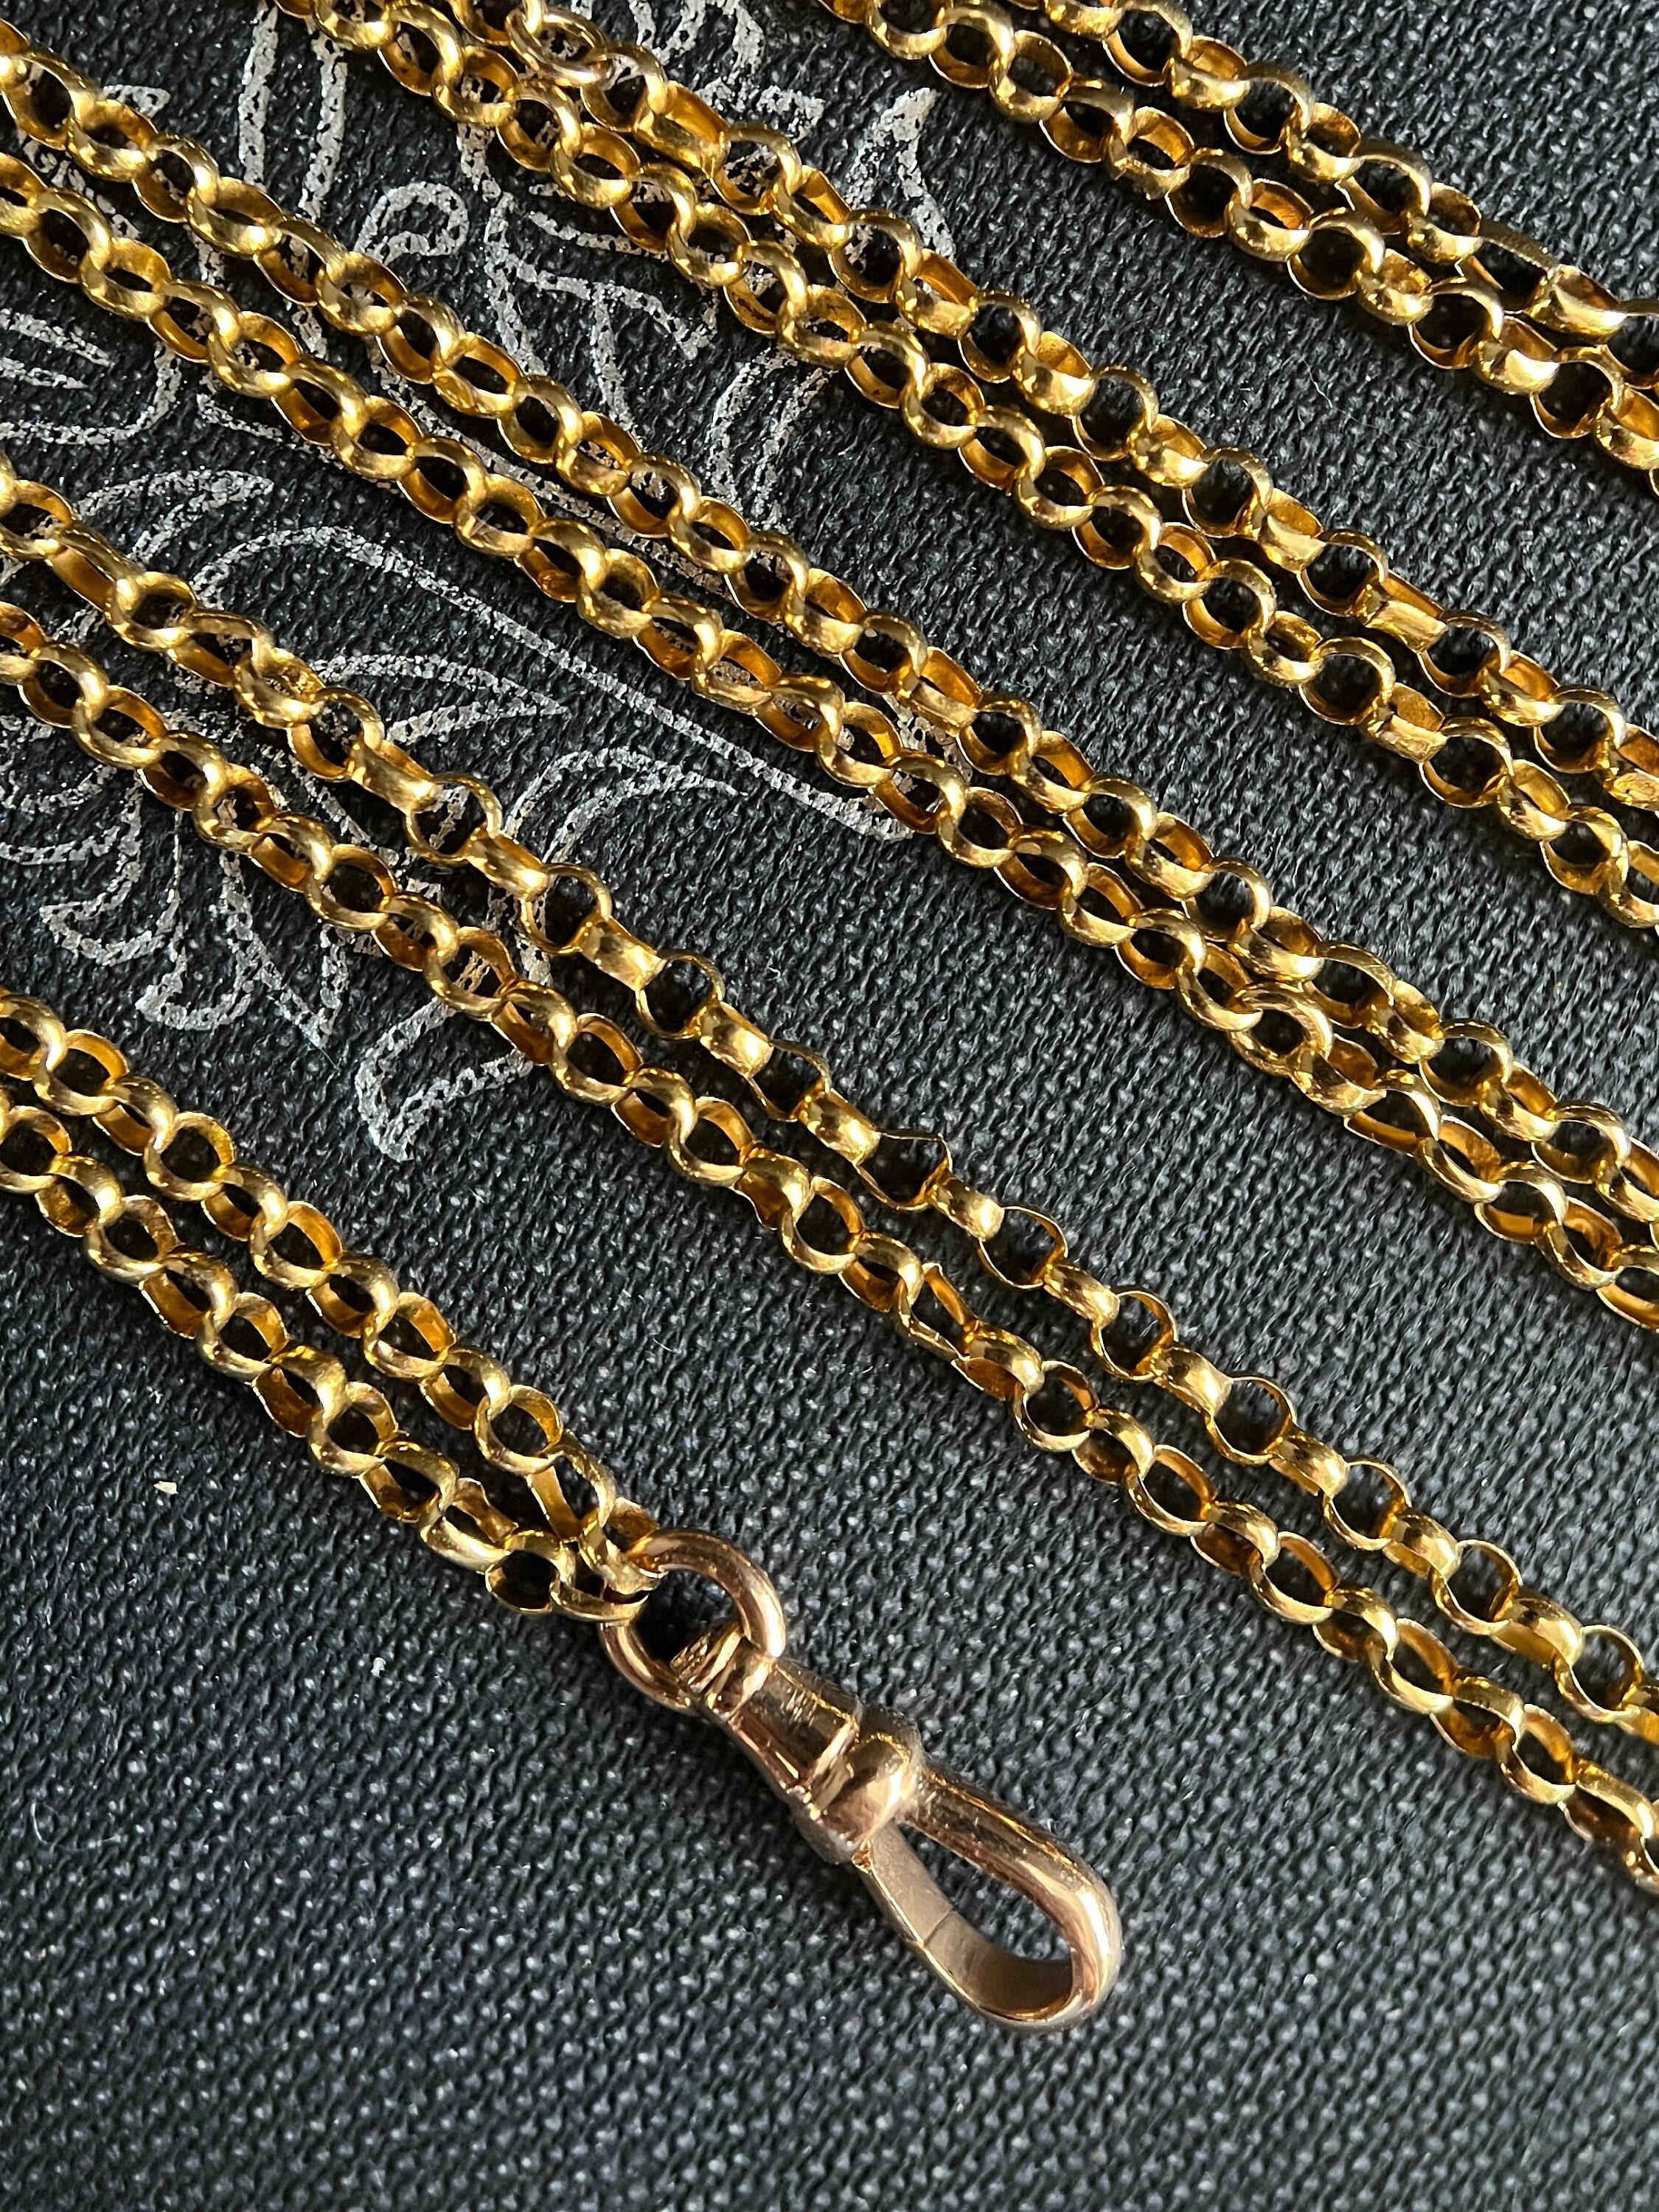 Antique Gold Belcher Chain, Long Link 18K 1800’s